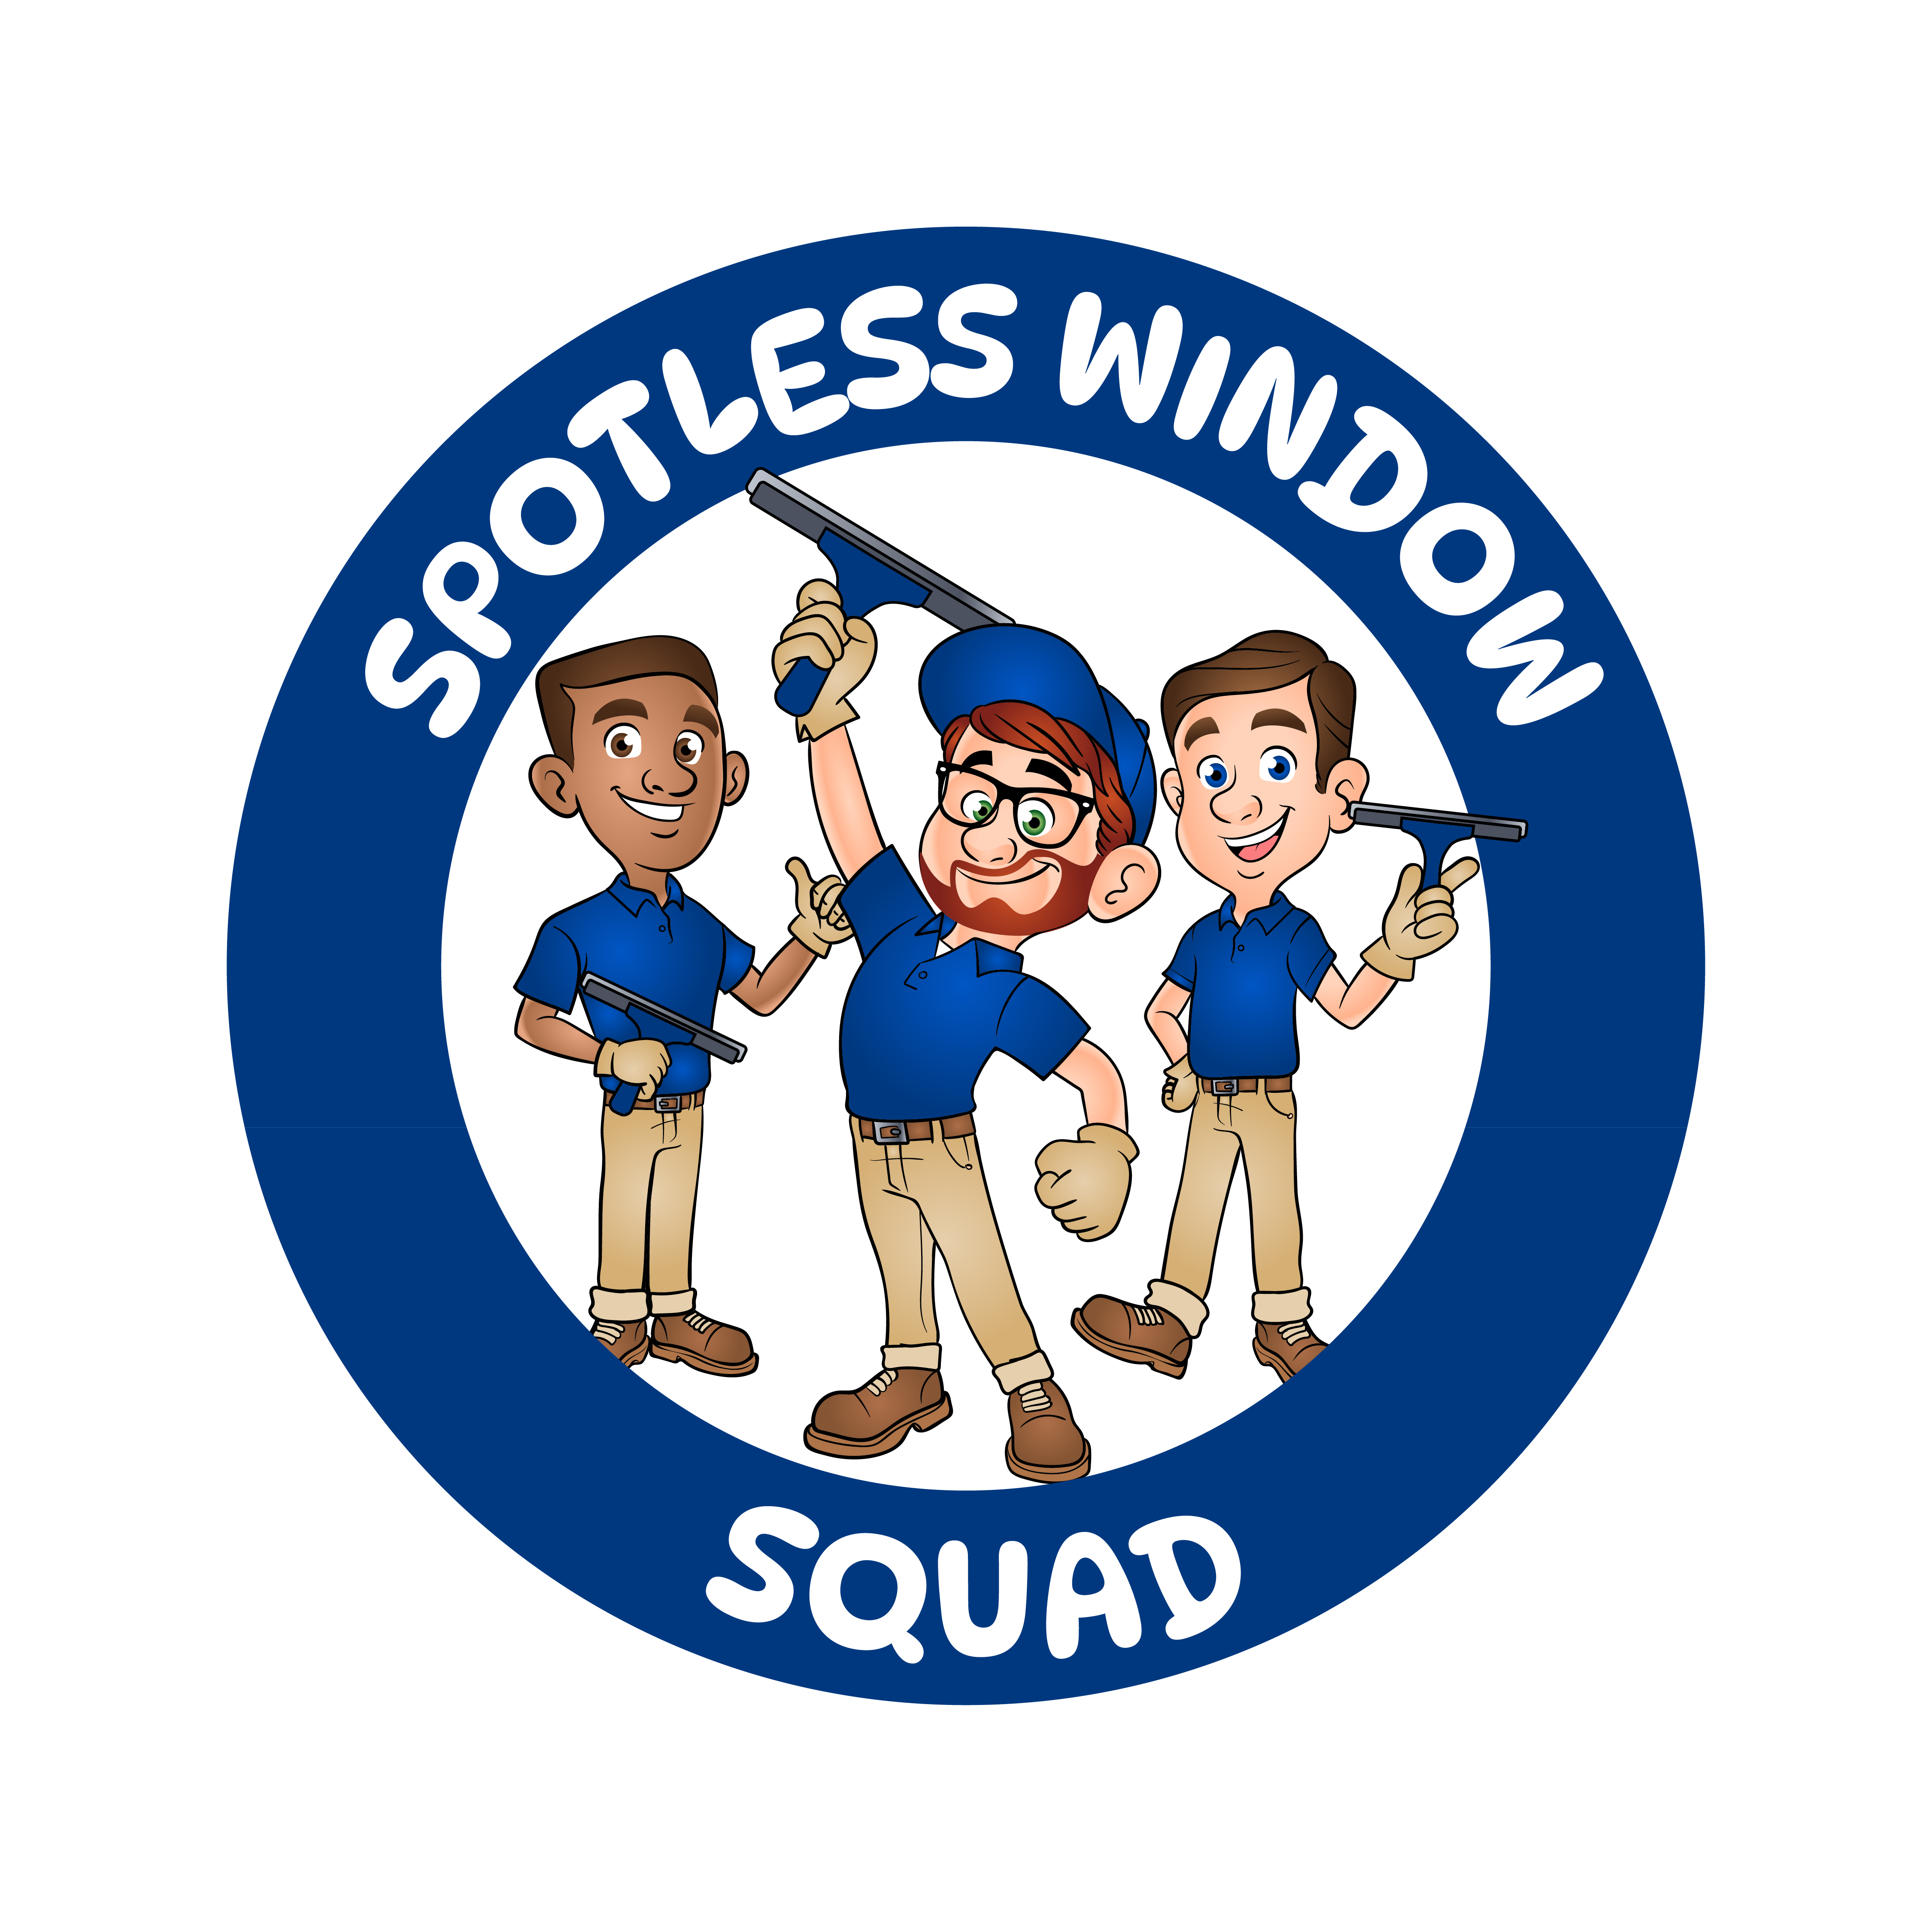 Spotless Window Squad Logo